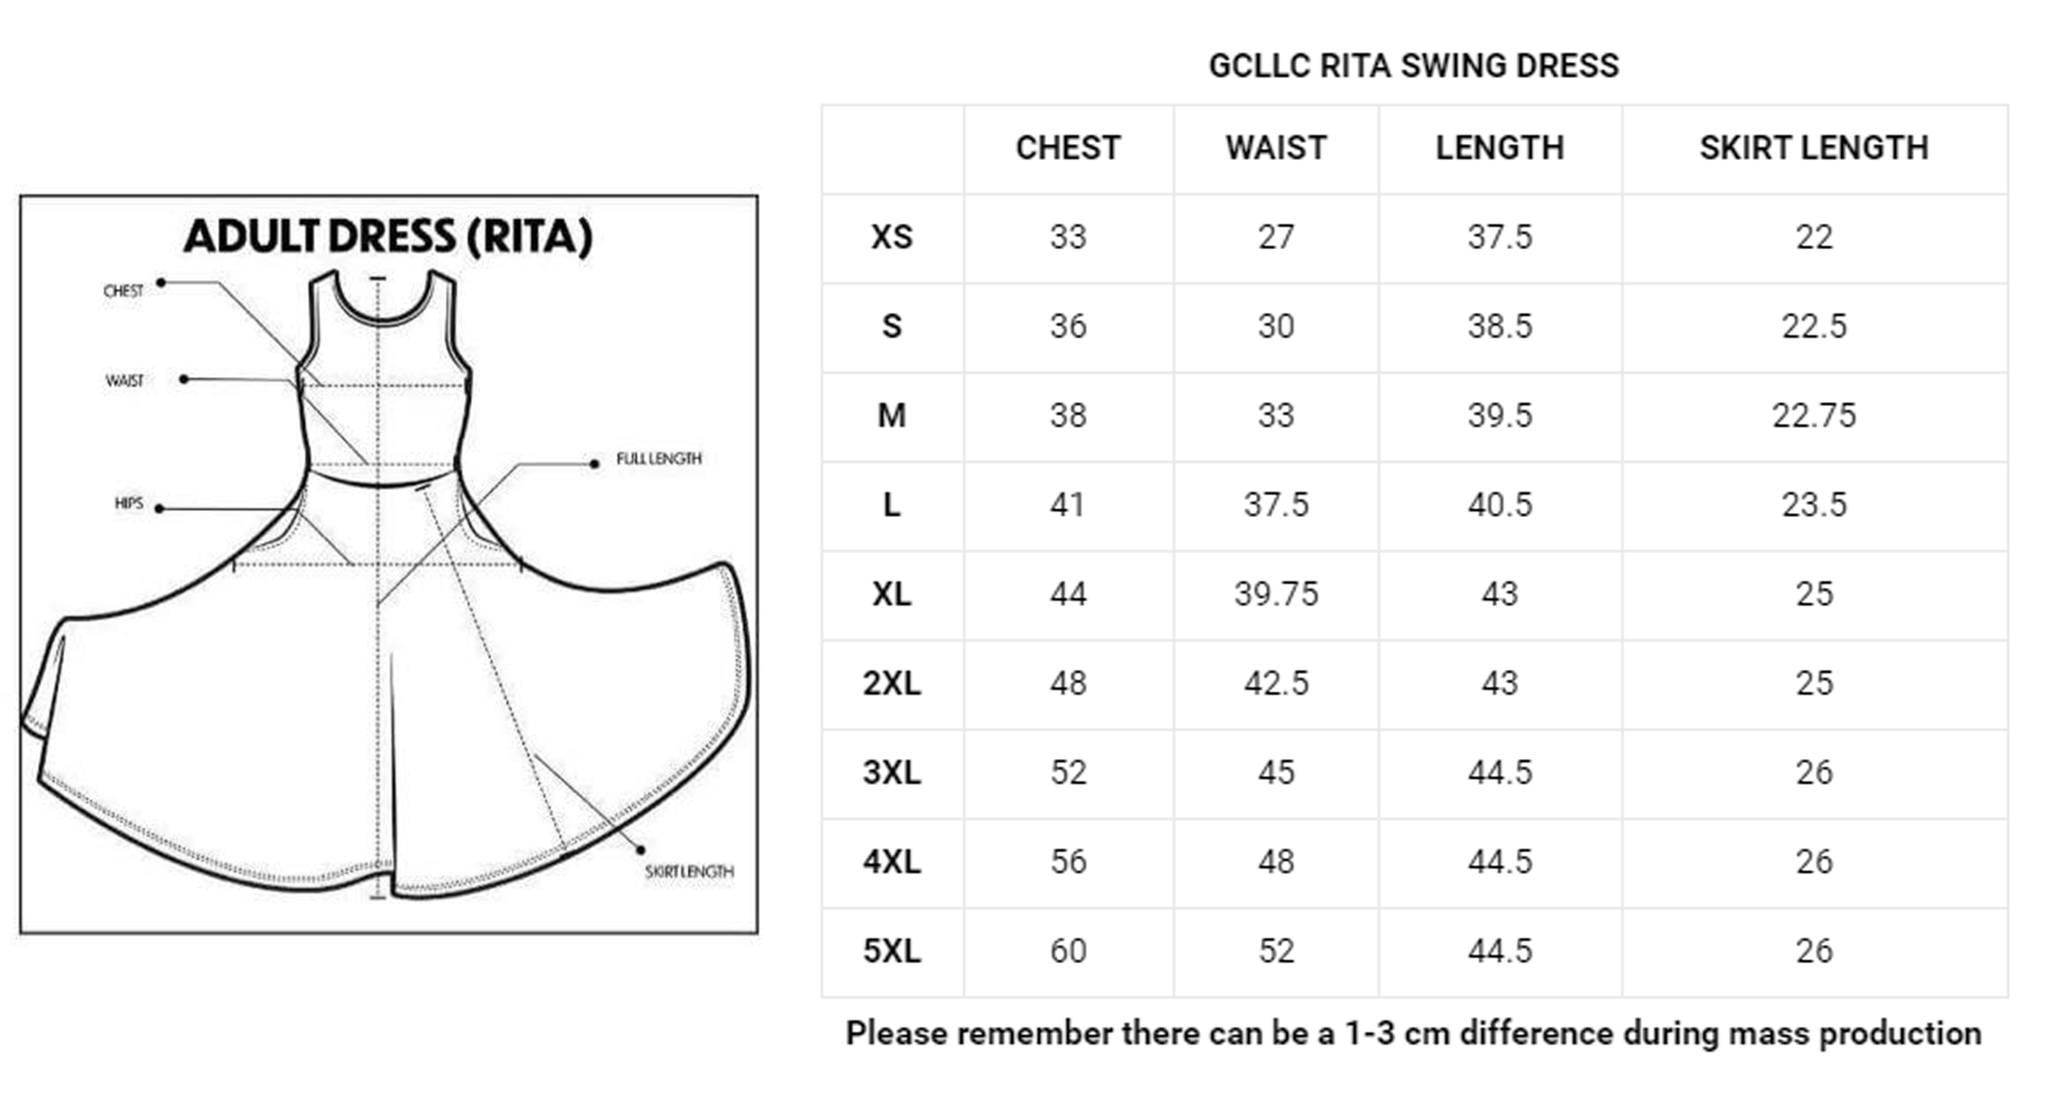 RITA SWING DRESS RUN-ANIMAL PRINT